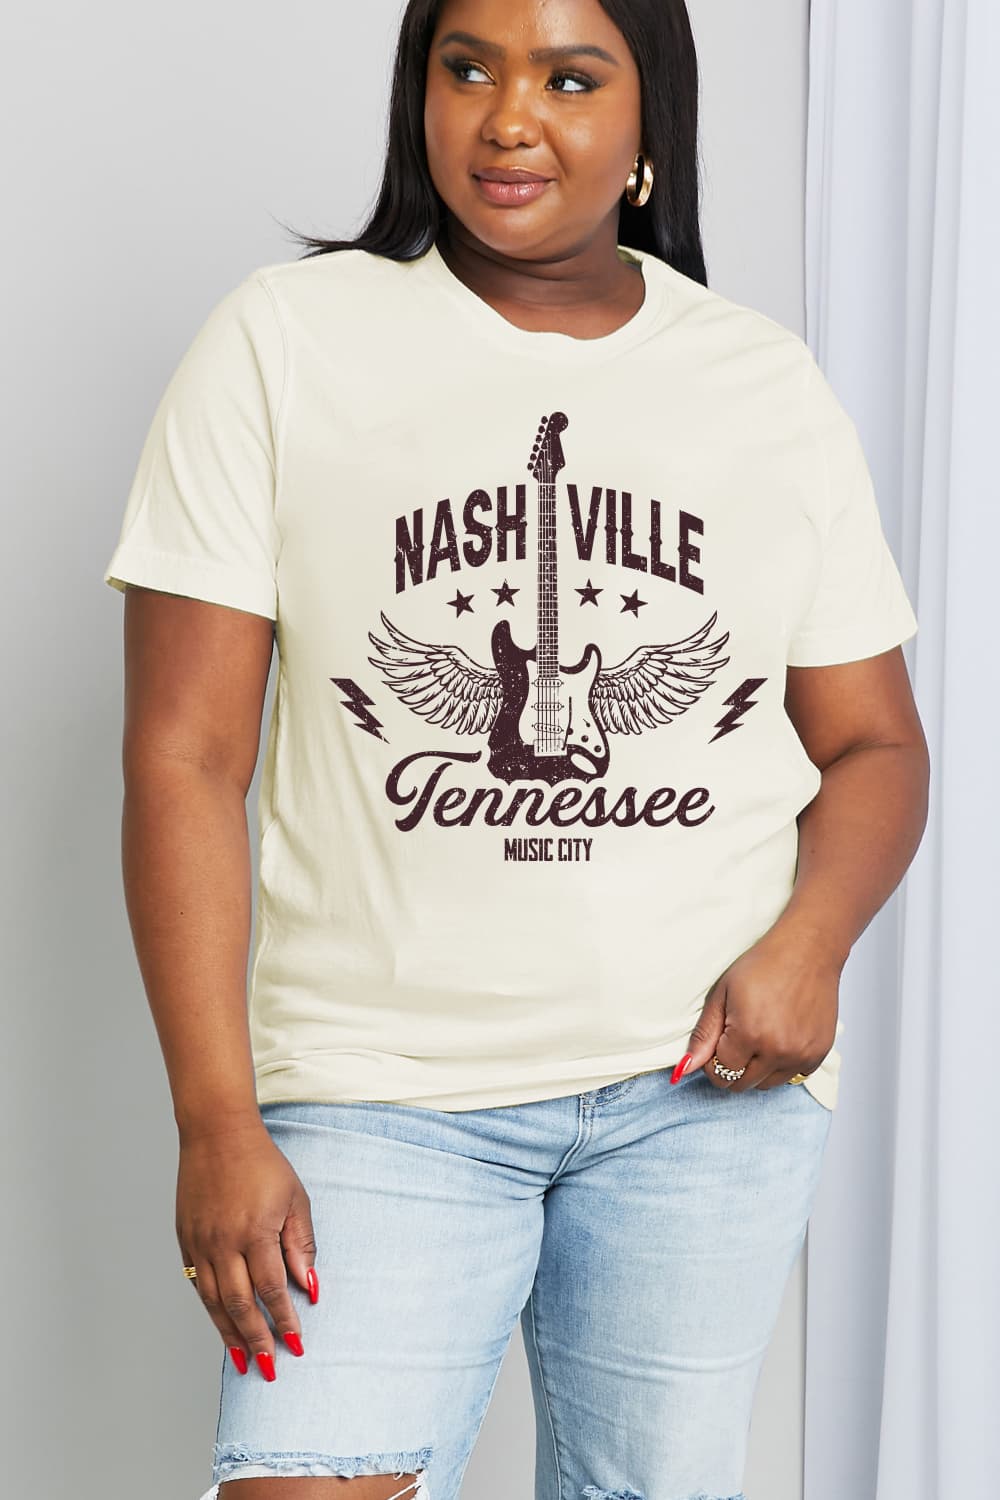 NASHVILLE TENNESSEE MUSIC CITY Graphic Cotton Tee